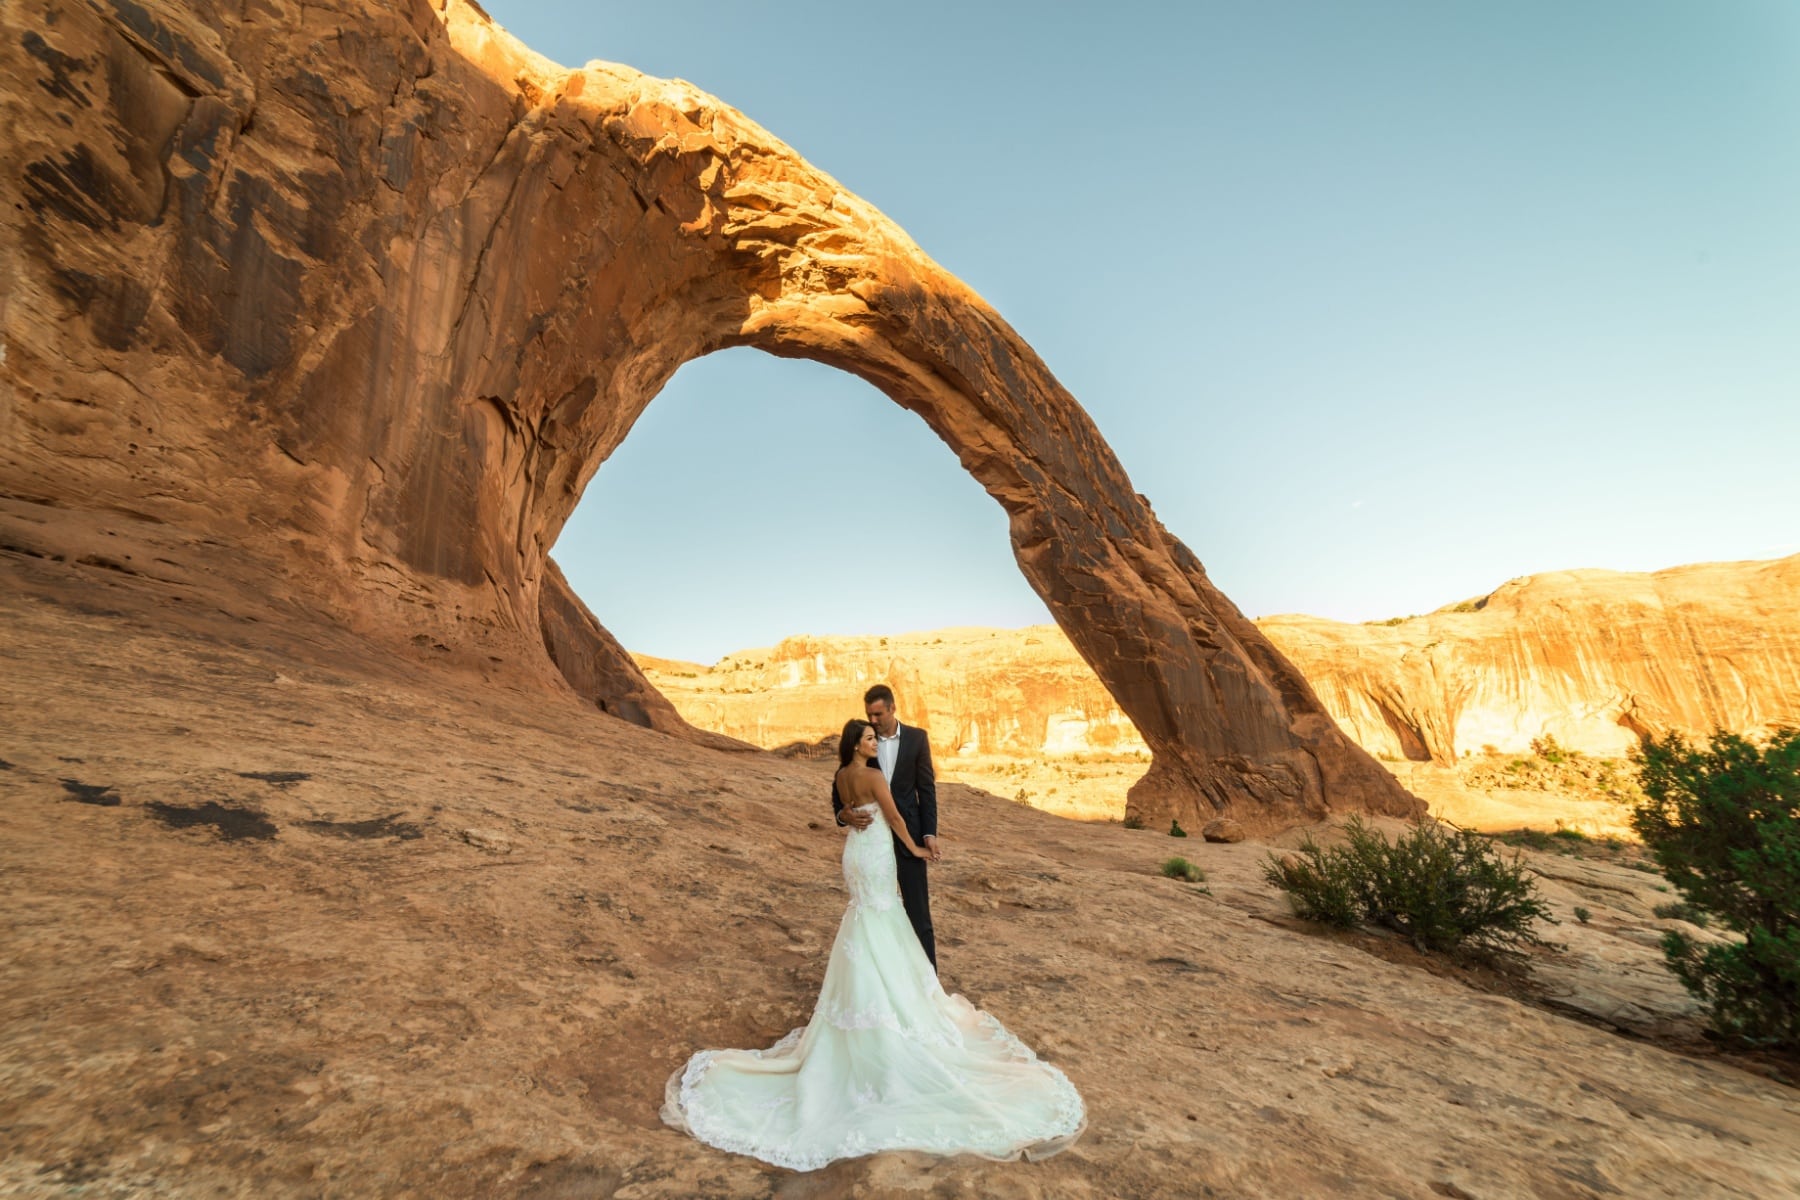 A wedding near a natural arch in Utah